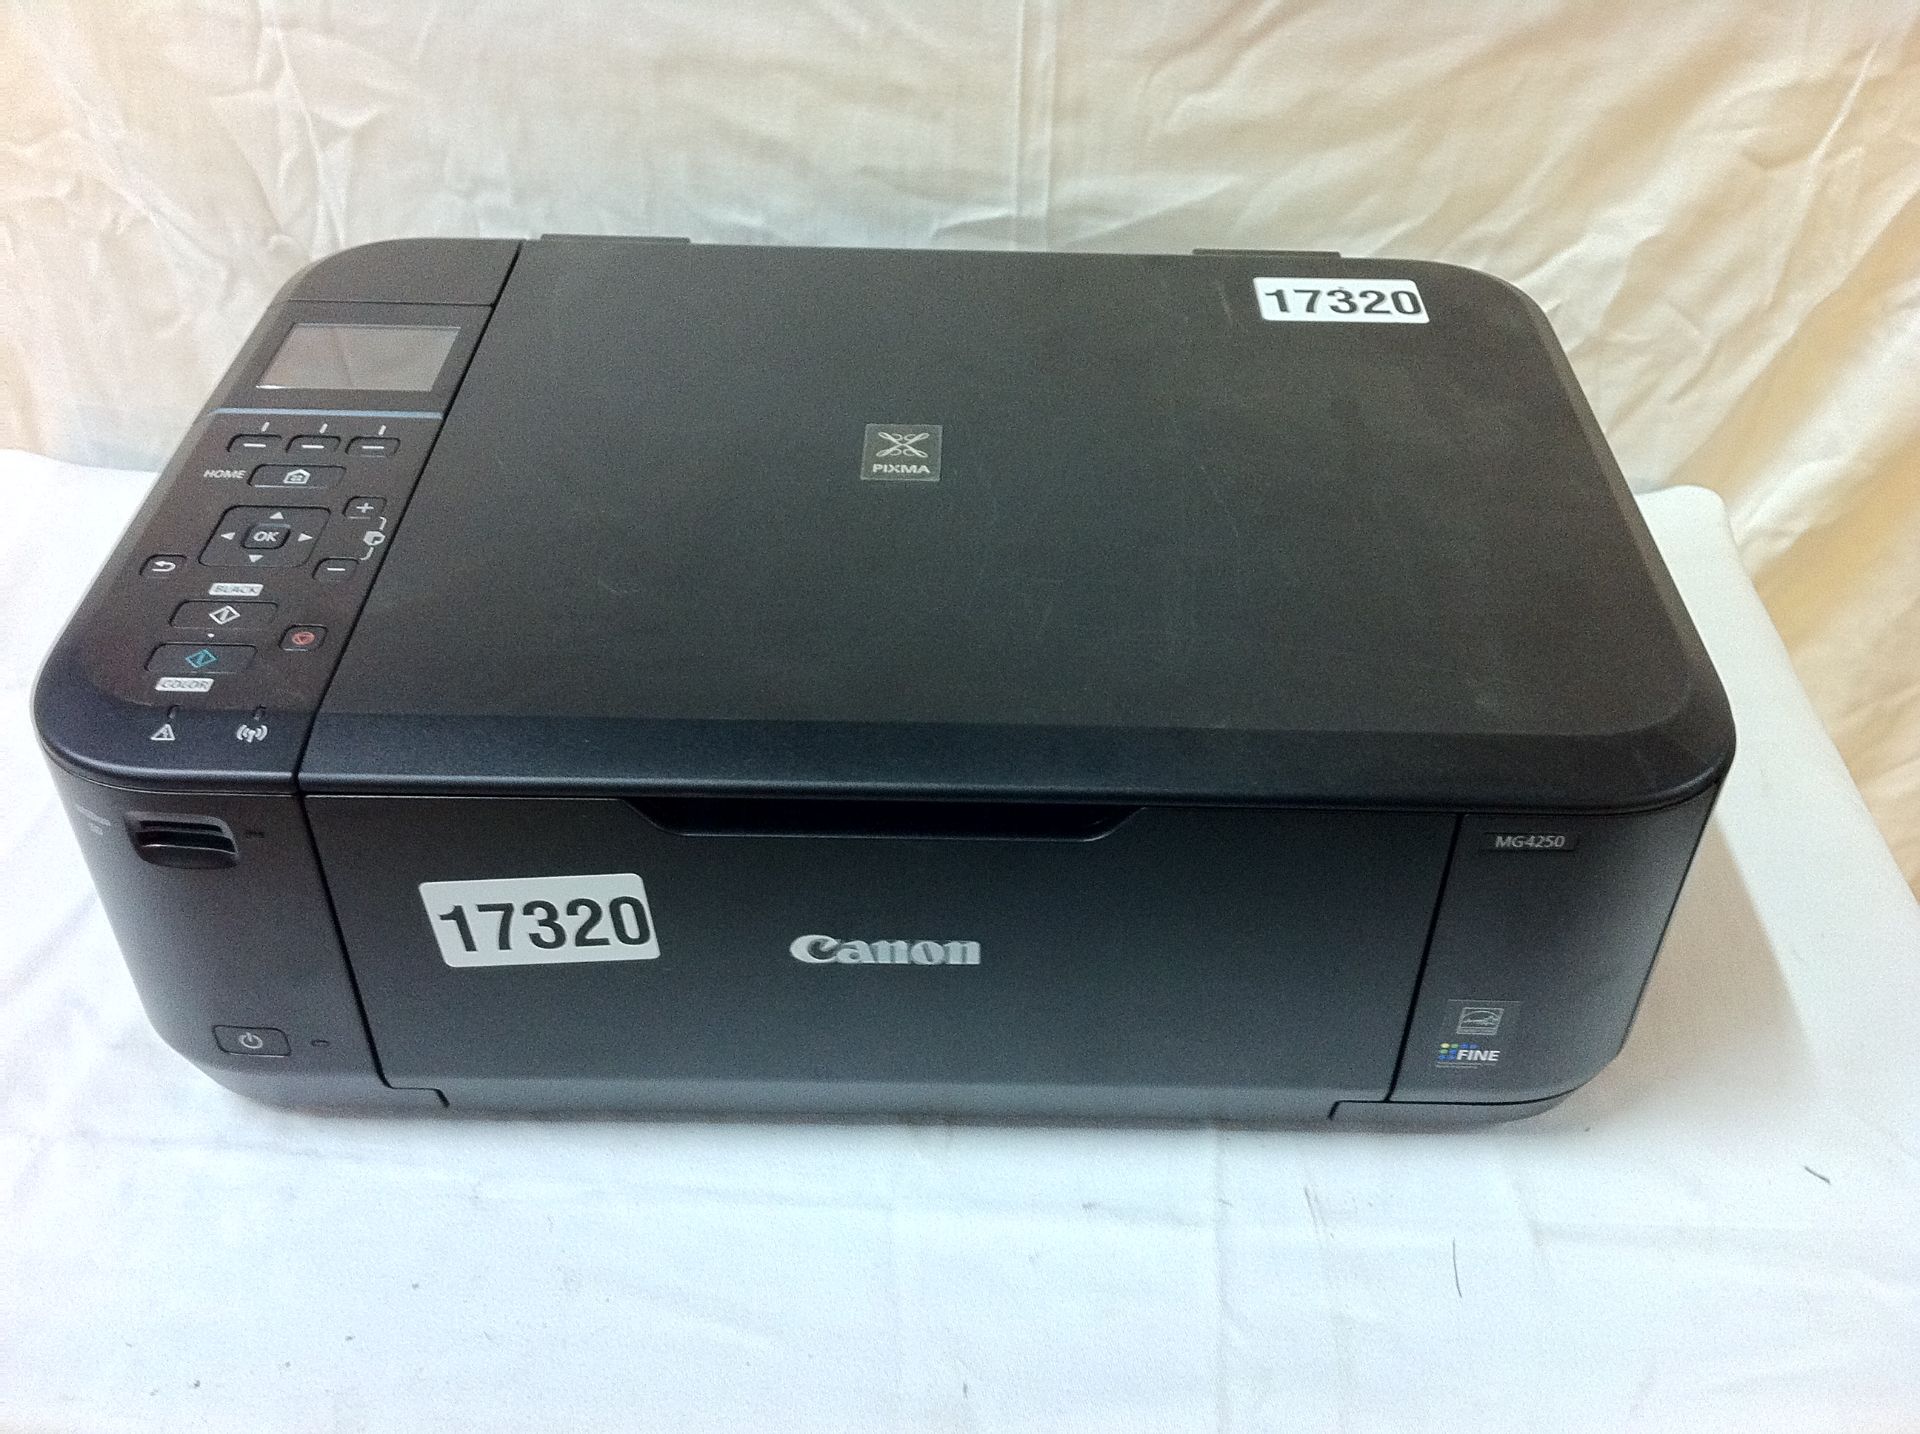 3 Printers, HP Envy 4500 Printer/Scanner/Copier, Cannon MG4250 Printer/Scanner and HP LaserJet P1102